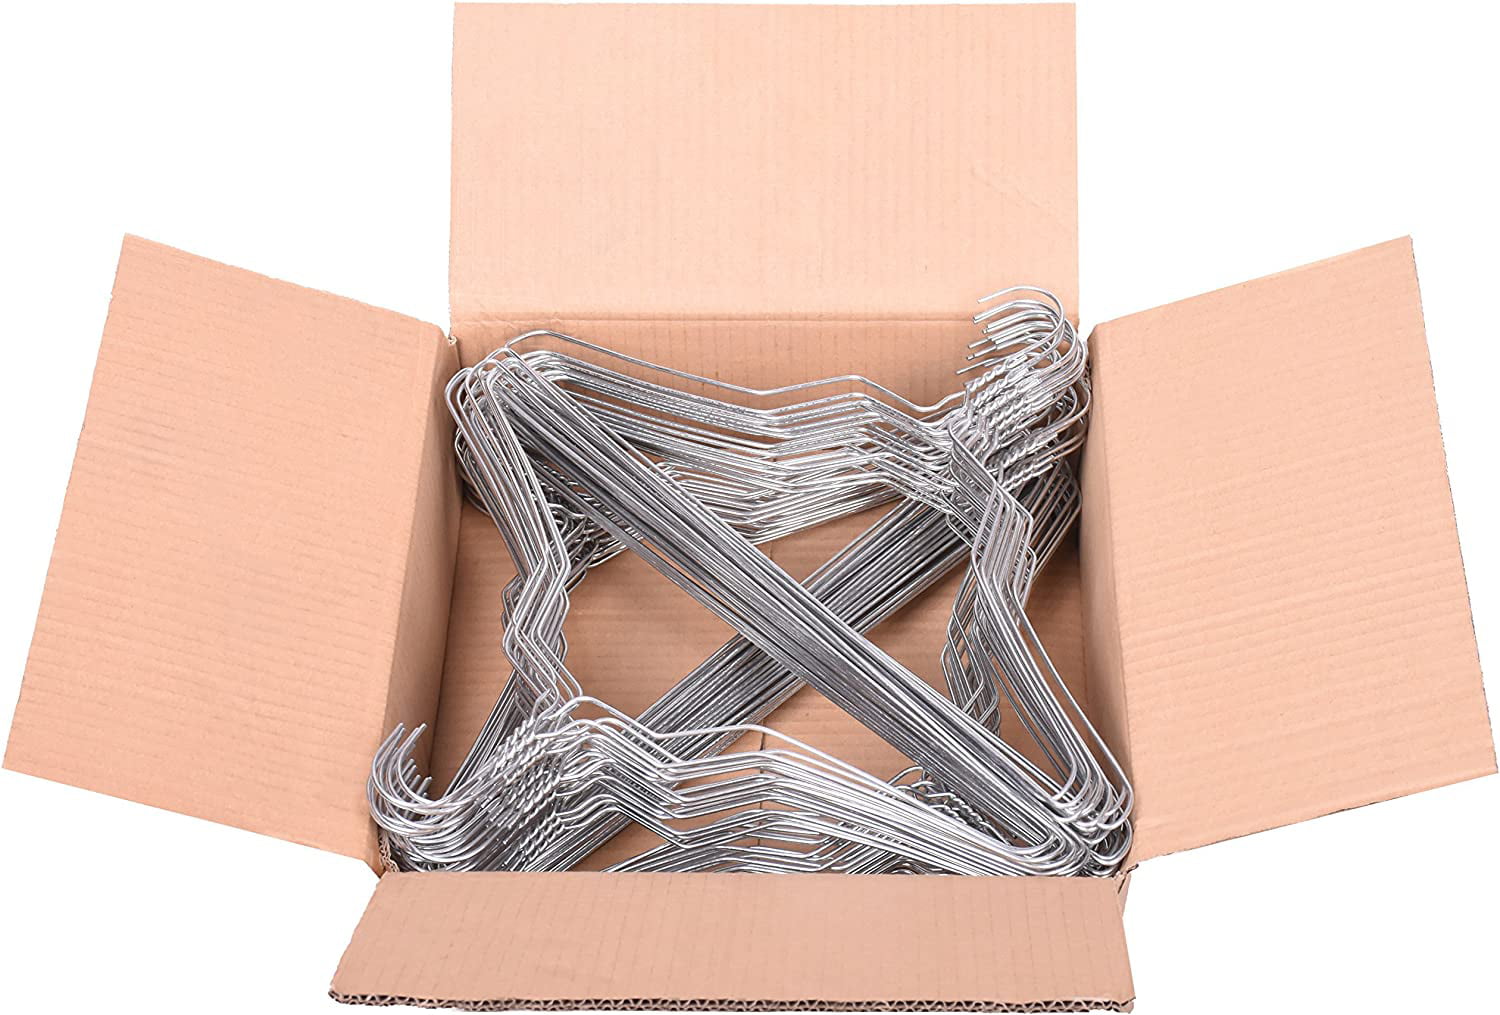  HANGERWORLD Silver Metal Wire Clothes Hangers 16inch